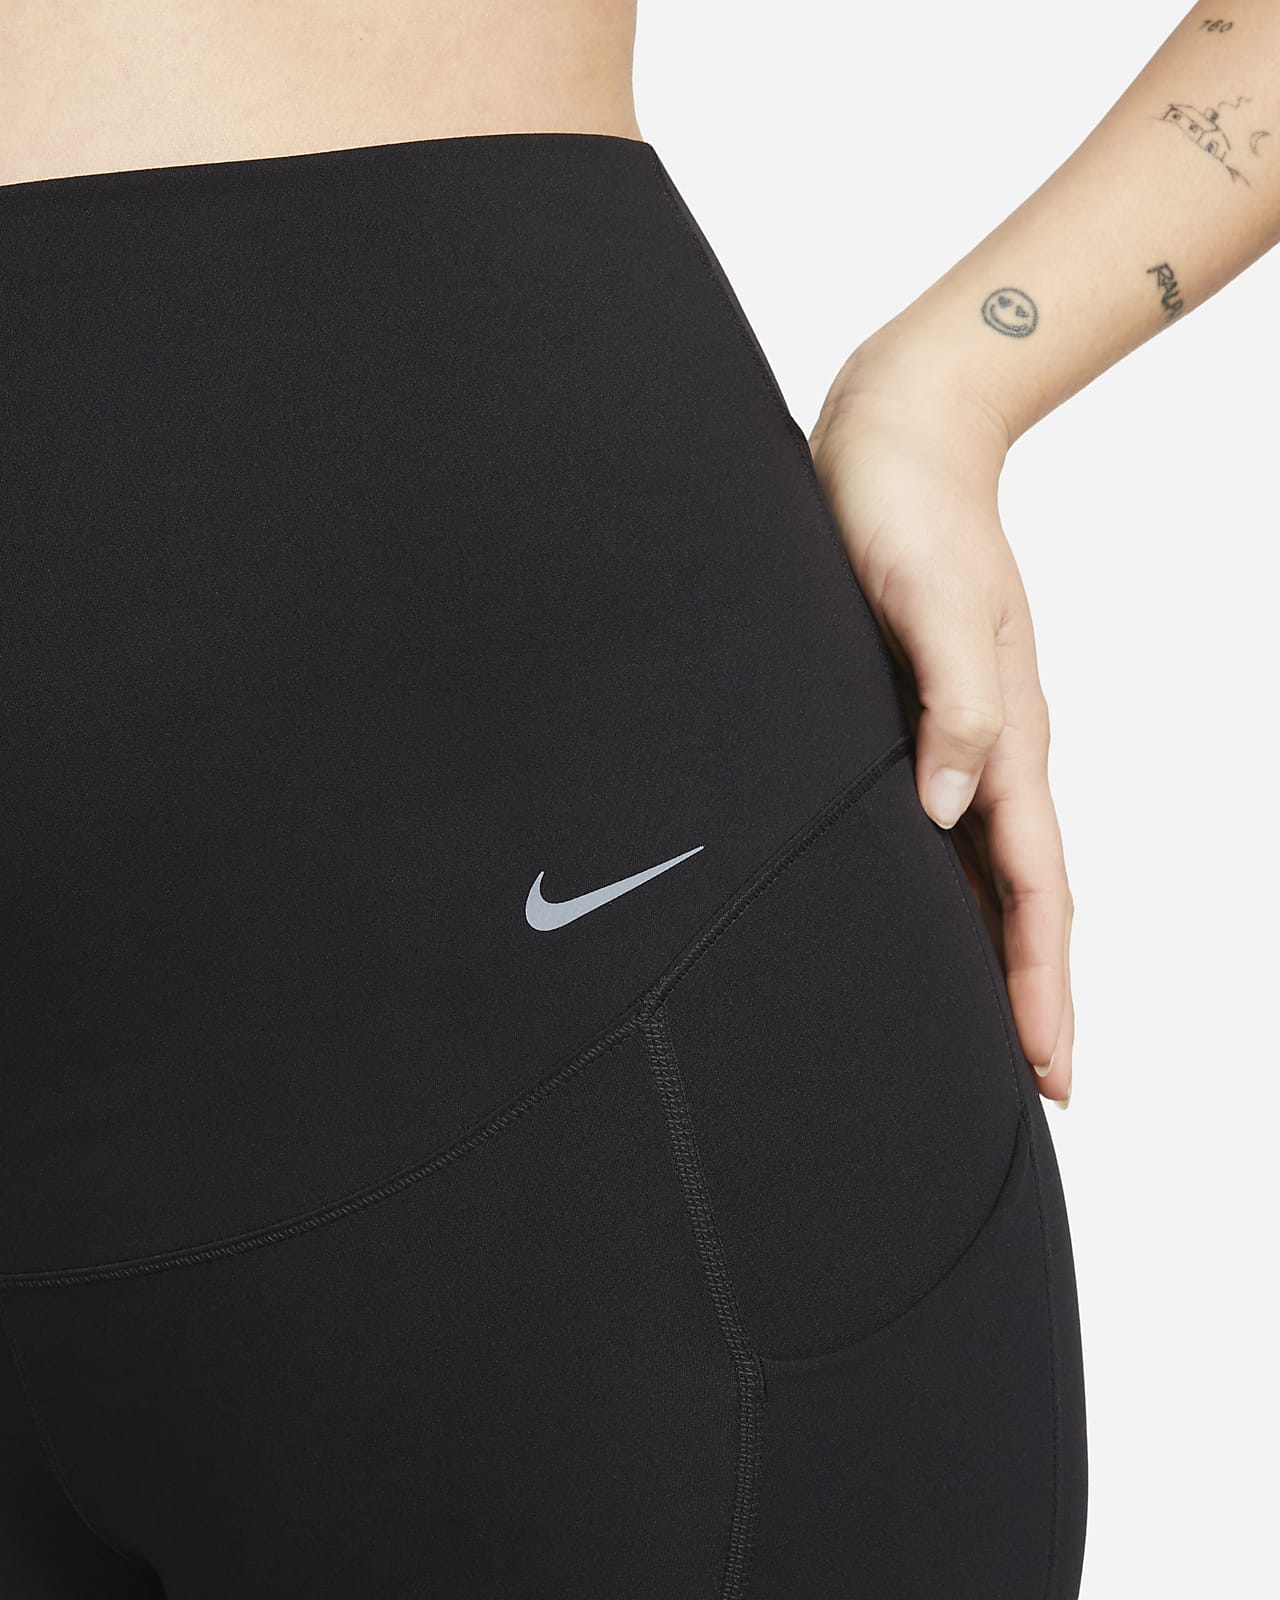 Brand new Nike leggings Sculpt Hyper Tight Fit